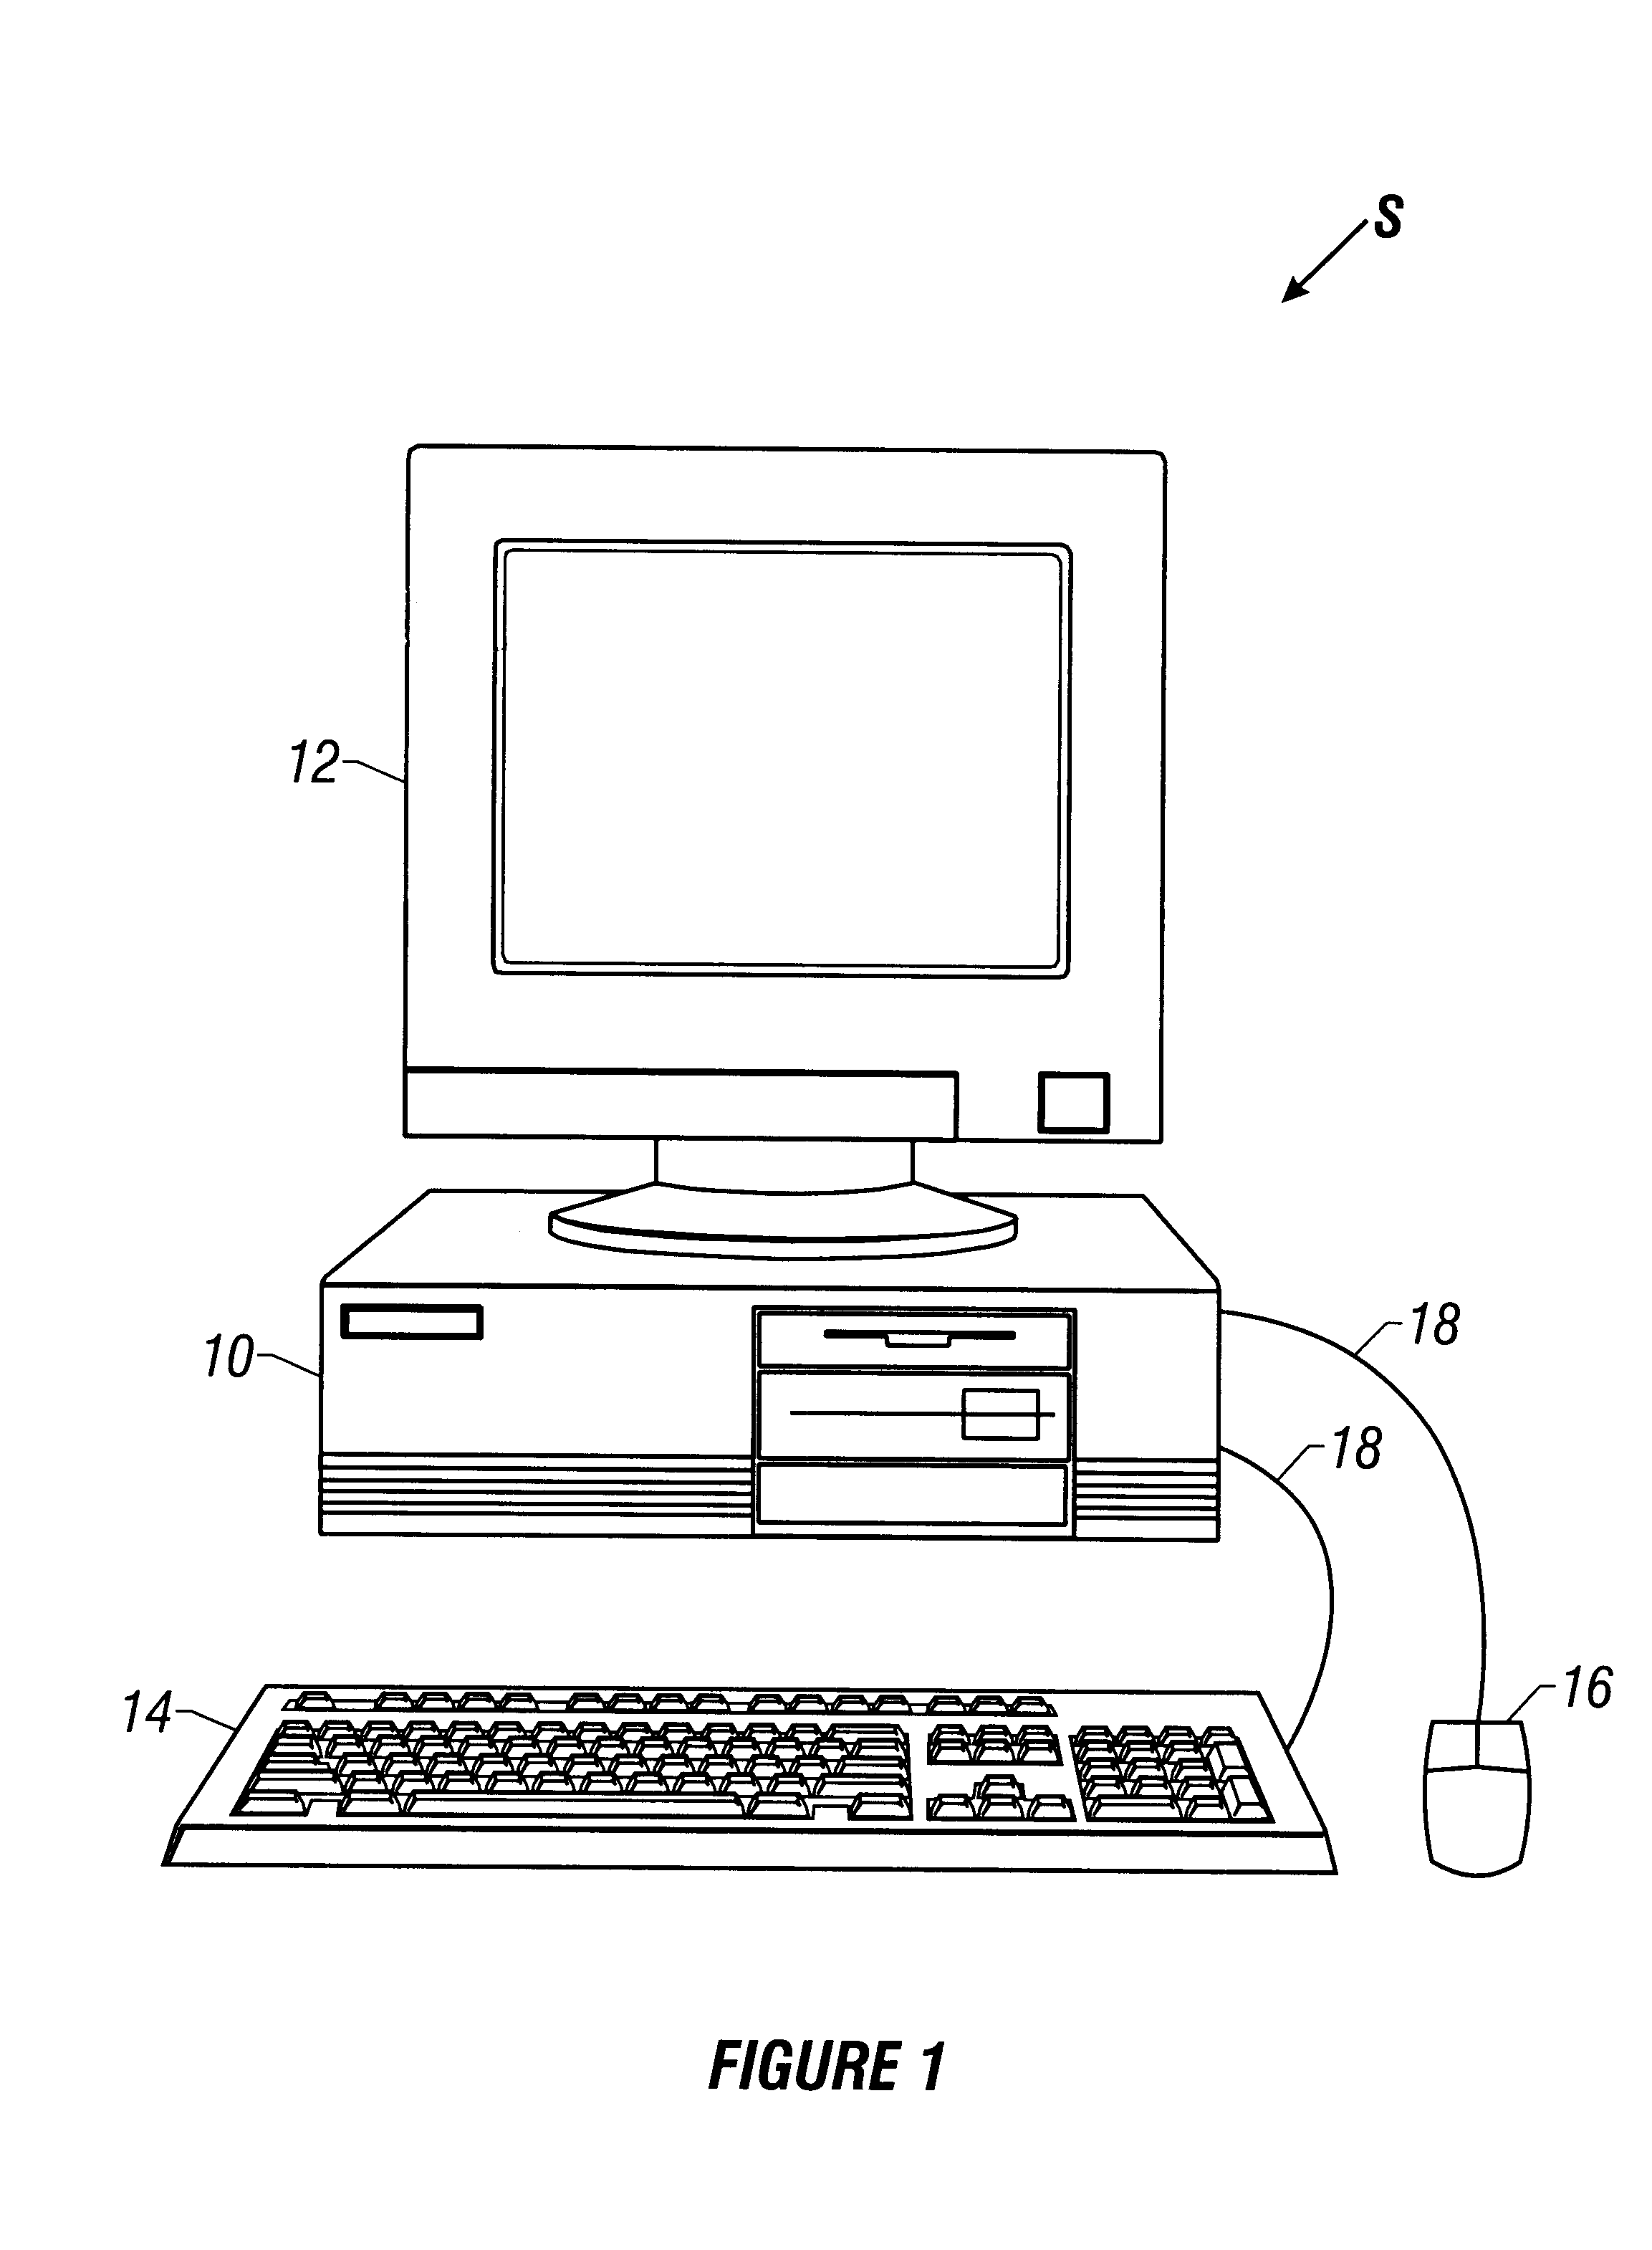 Method and apparatus for an ACPI compliant keyboard sleep key